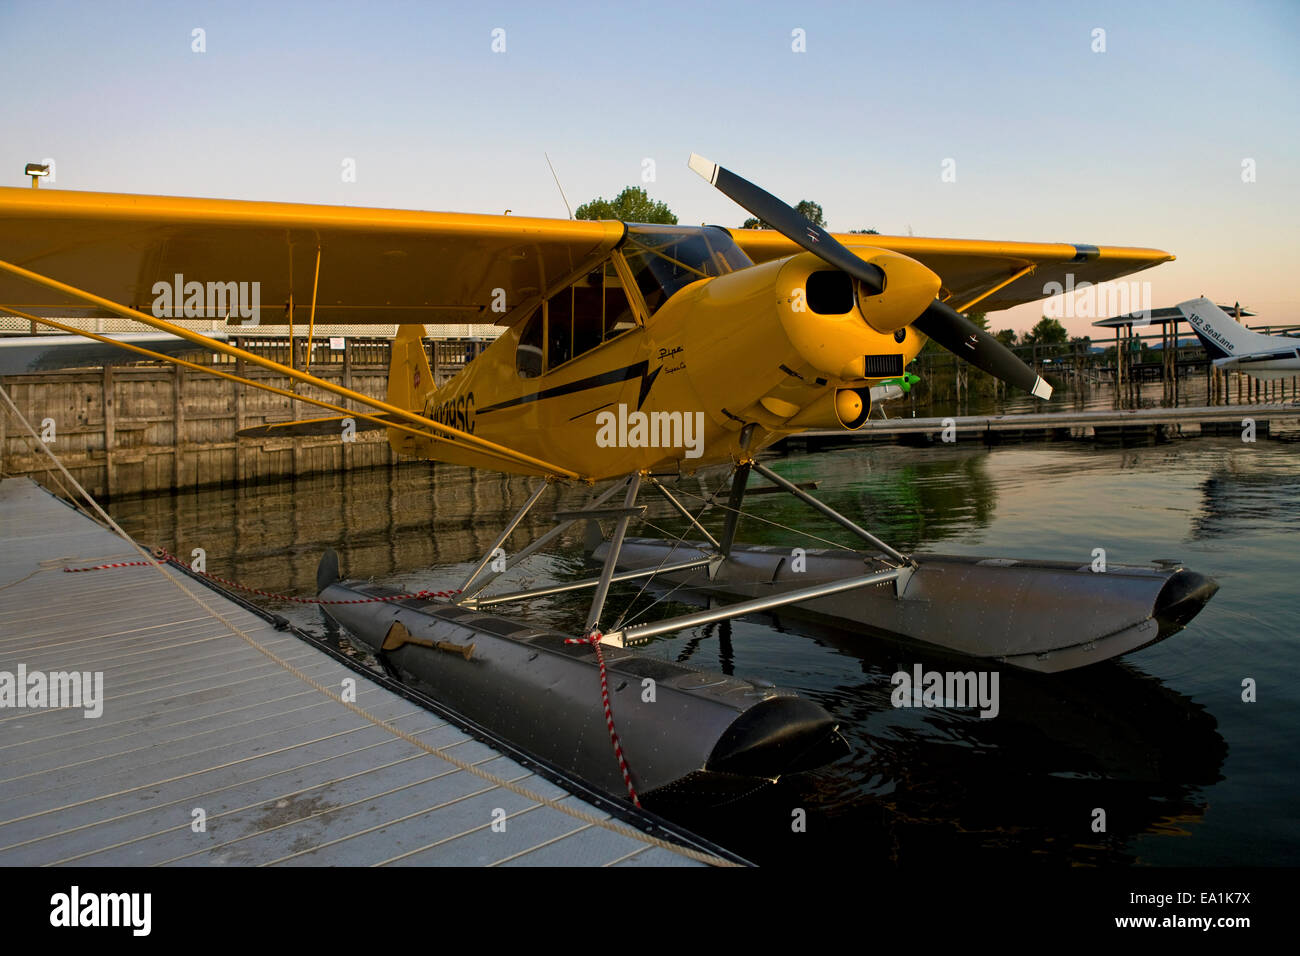 Piper Super Cub on Floats docked at the Sky Lark Motel dock, Seaplane Splash-In, Lakeport, California, Lake County, California Stock Photo